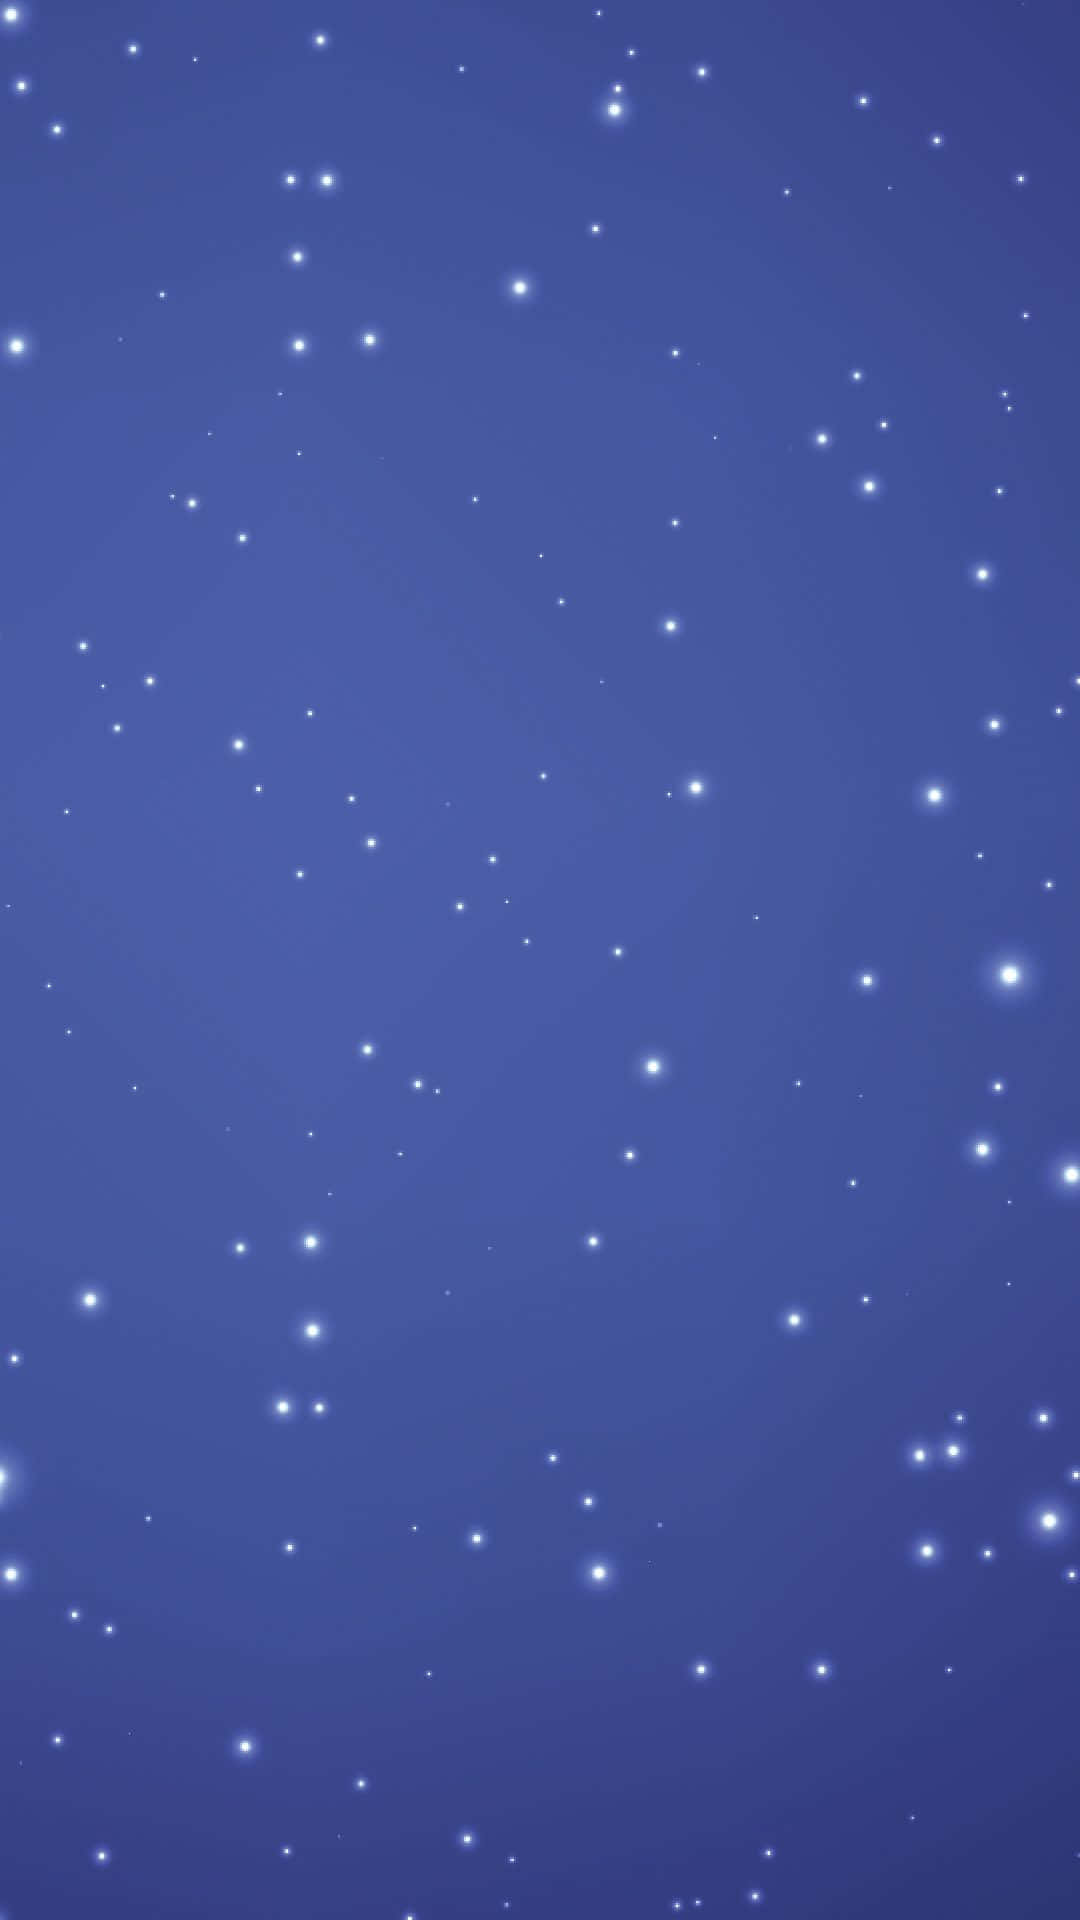 A Night Sky of Blue Stars Wallpaper